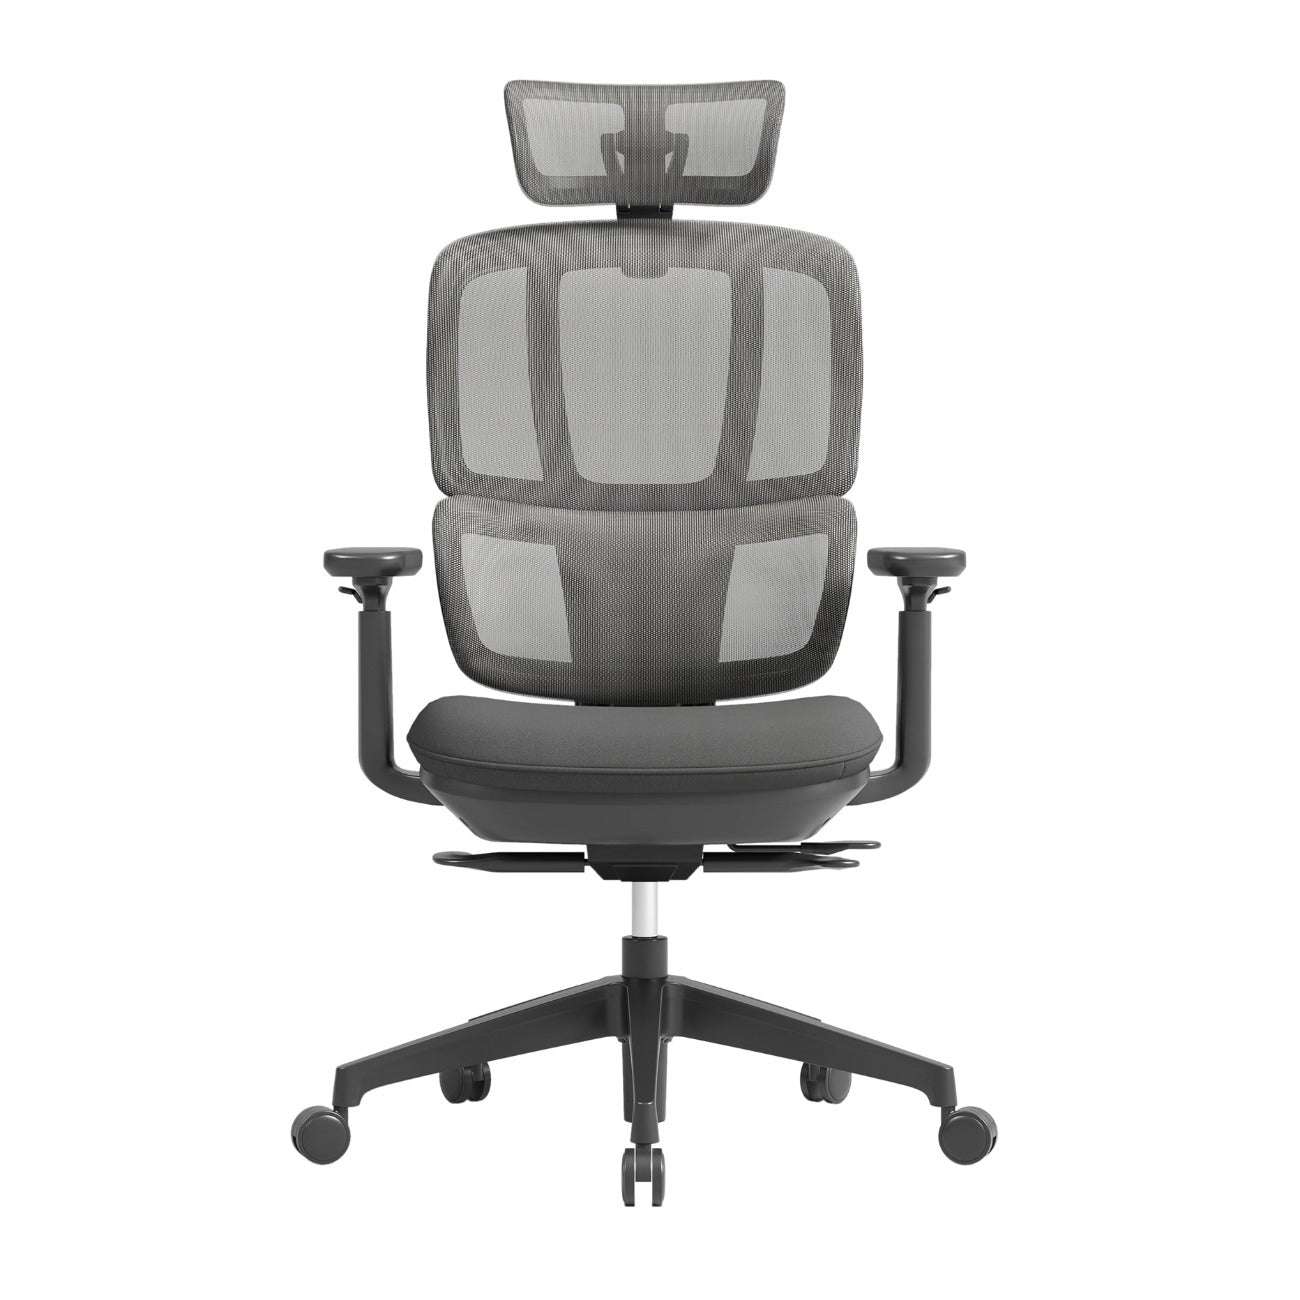 Posture Ergonomic Chair